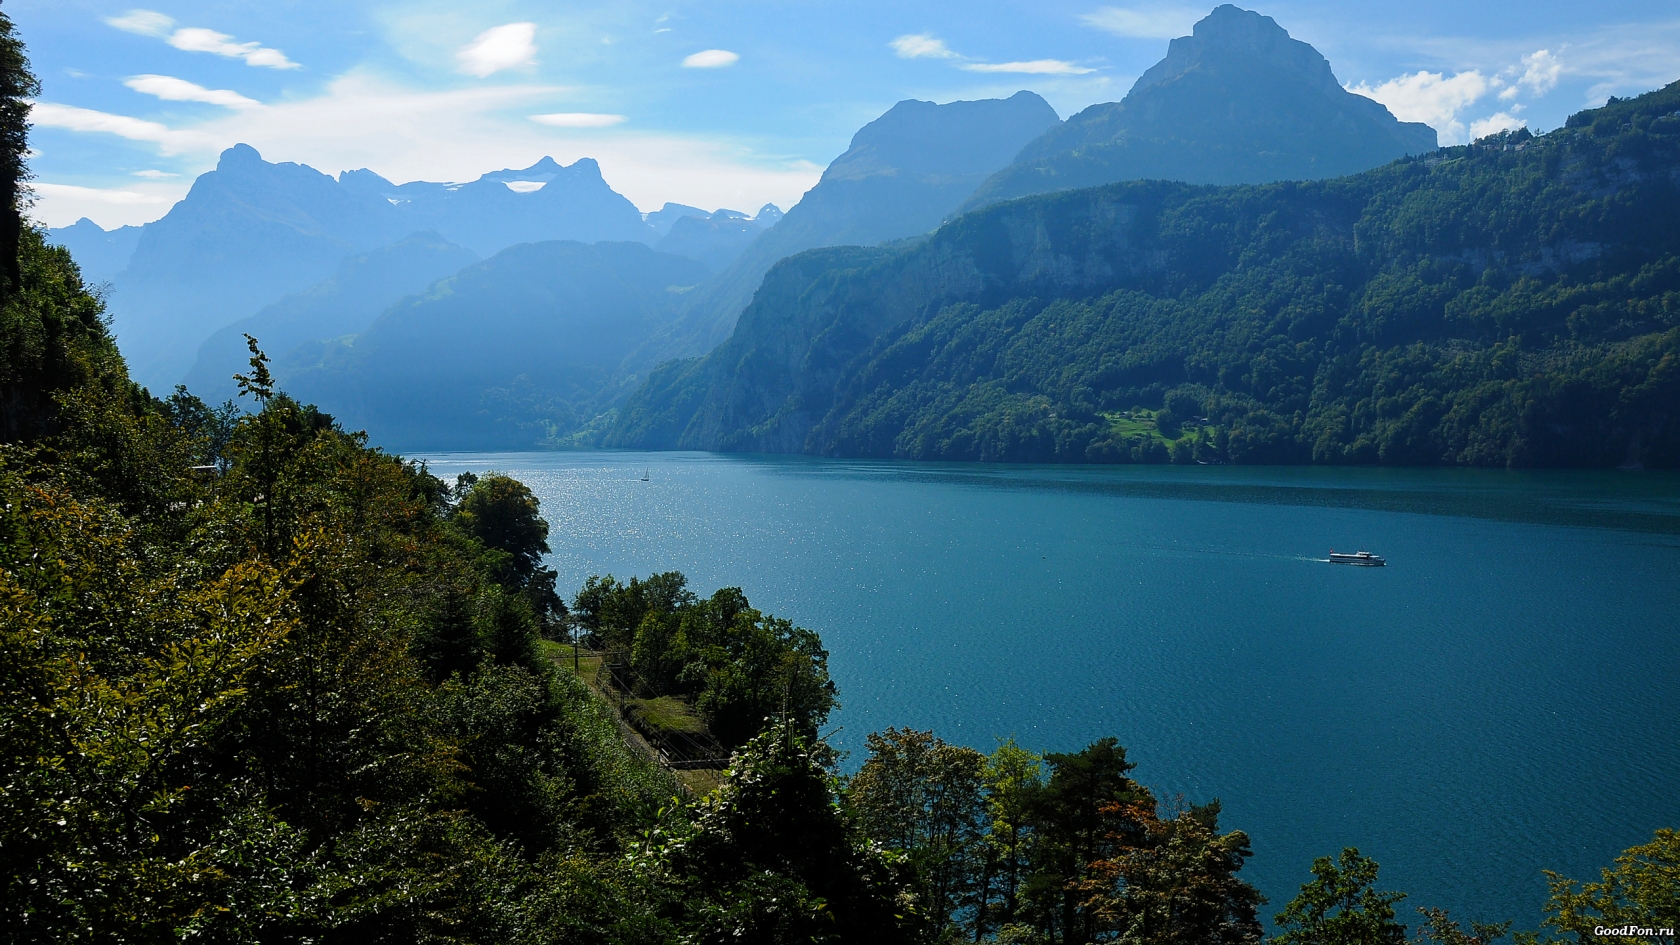 Beautiful Mountain Lake for 1680 x 945 HDTV resolution